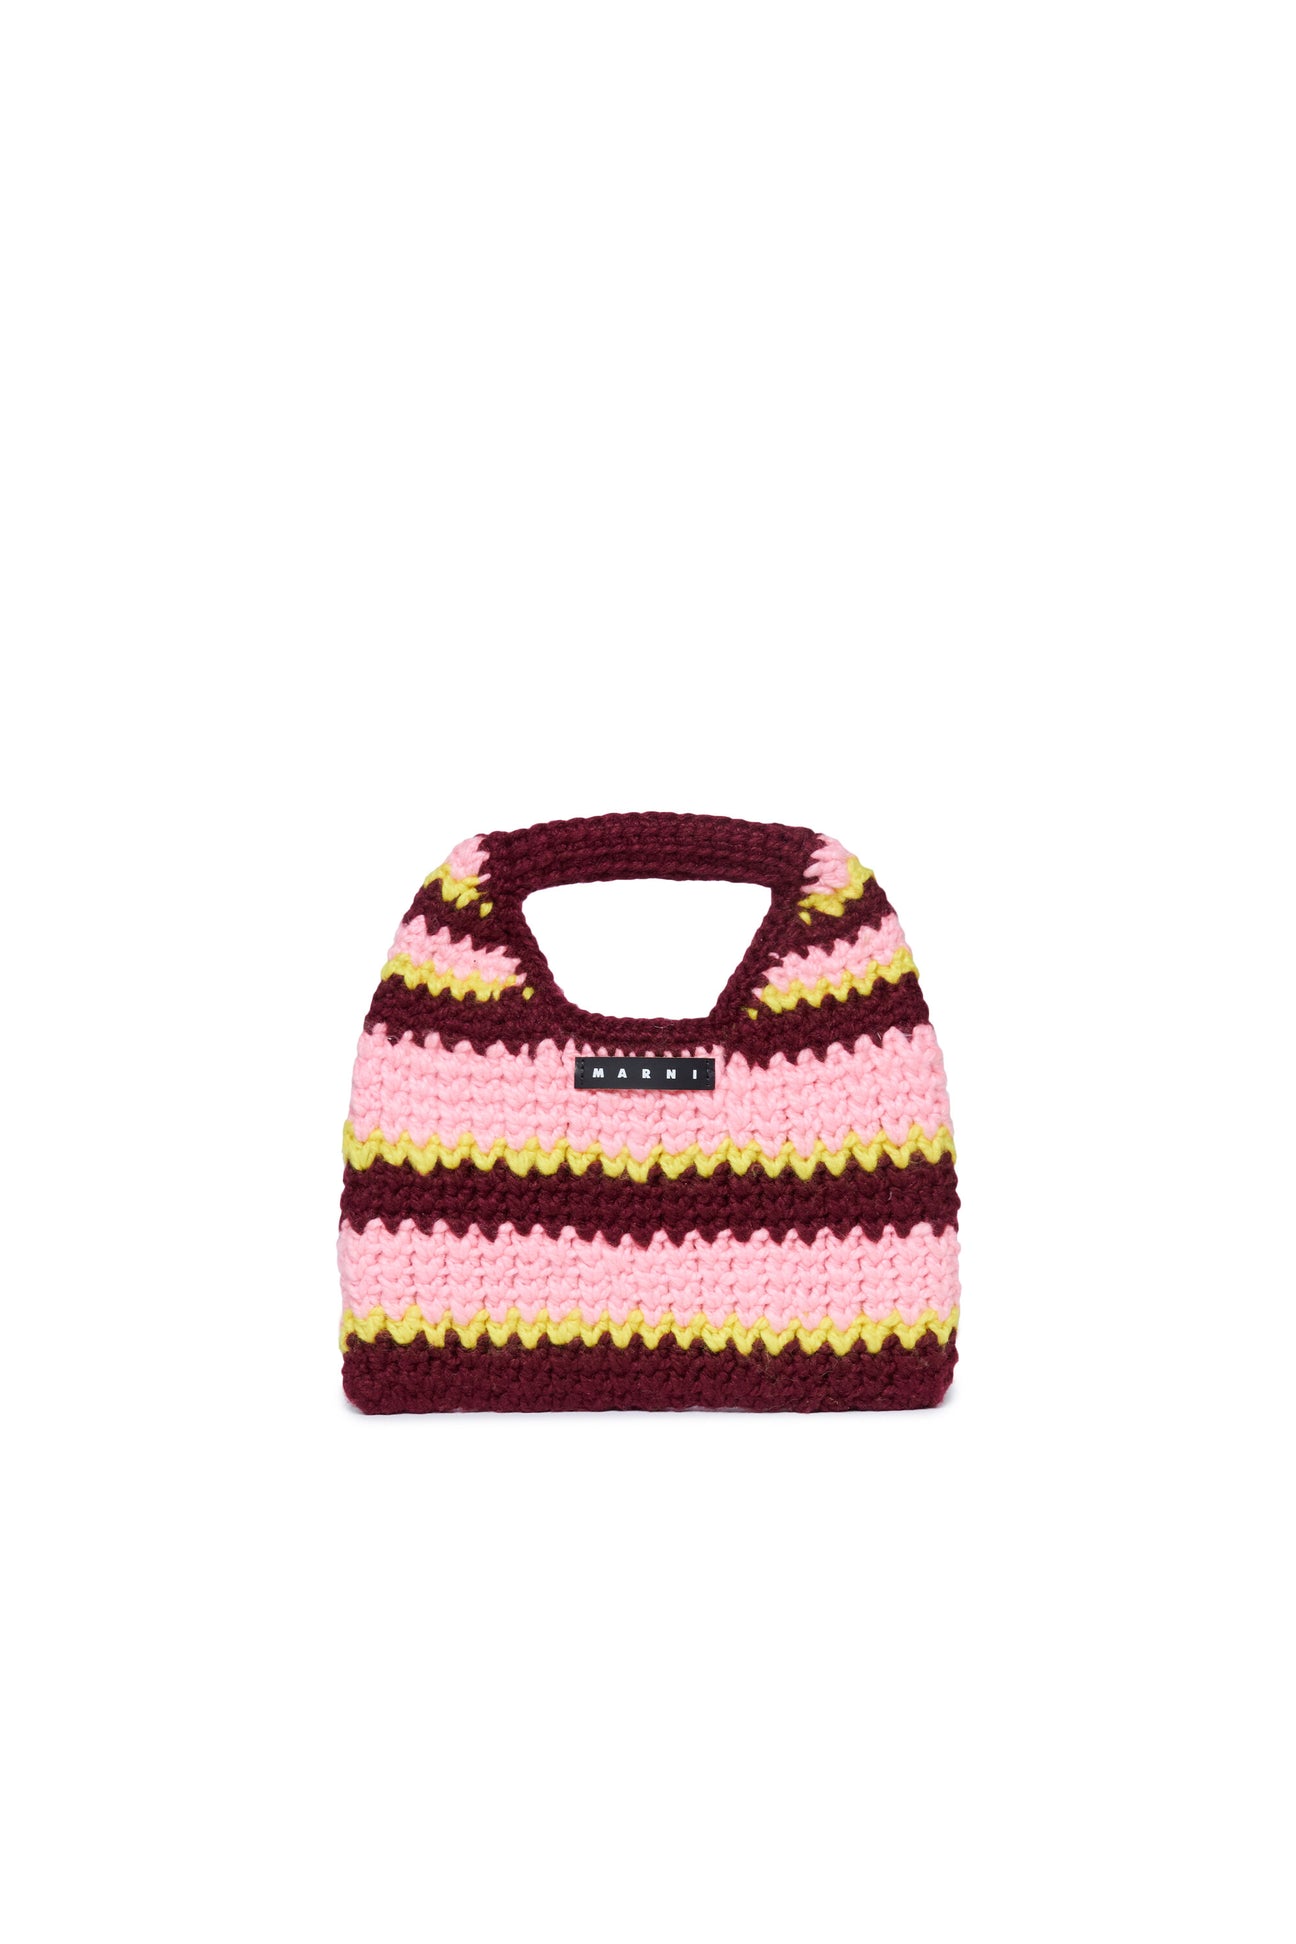 Wooly crochet bag 